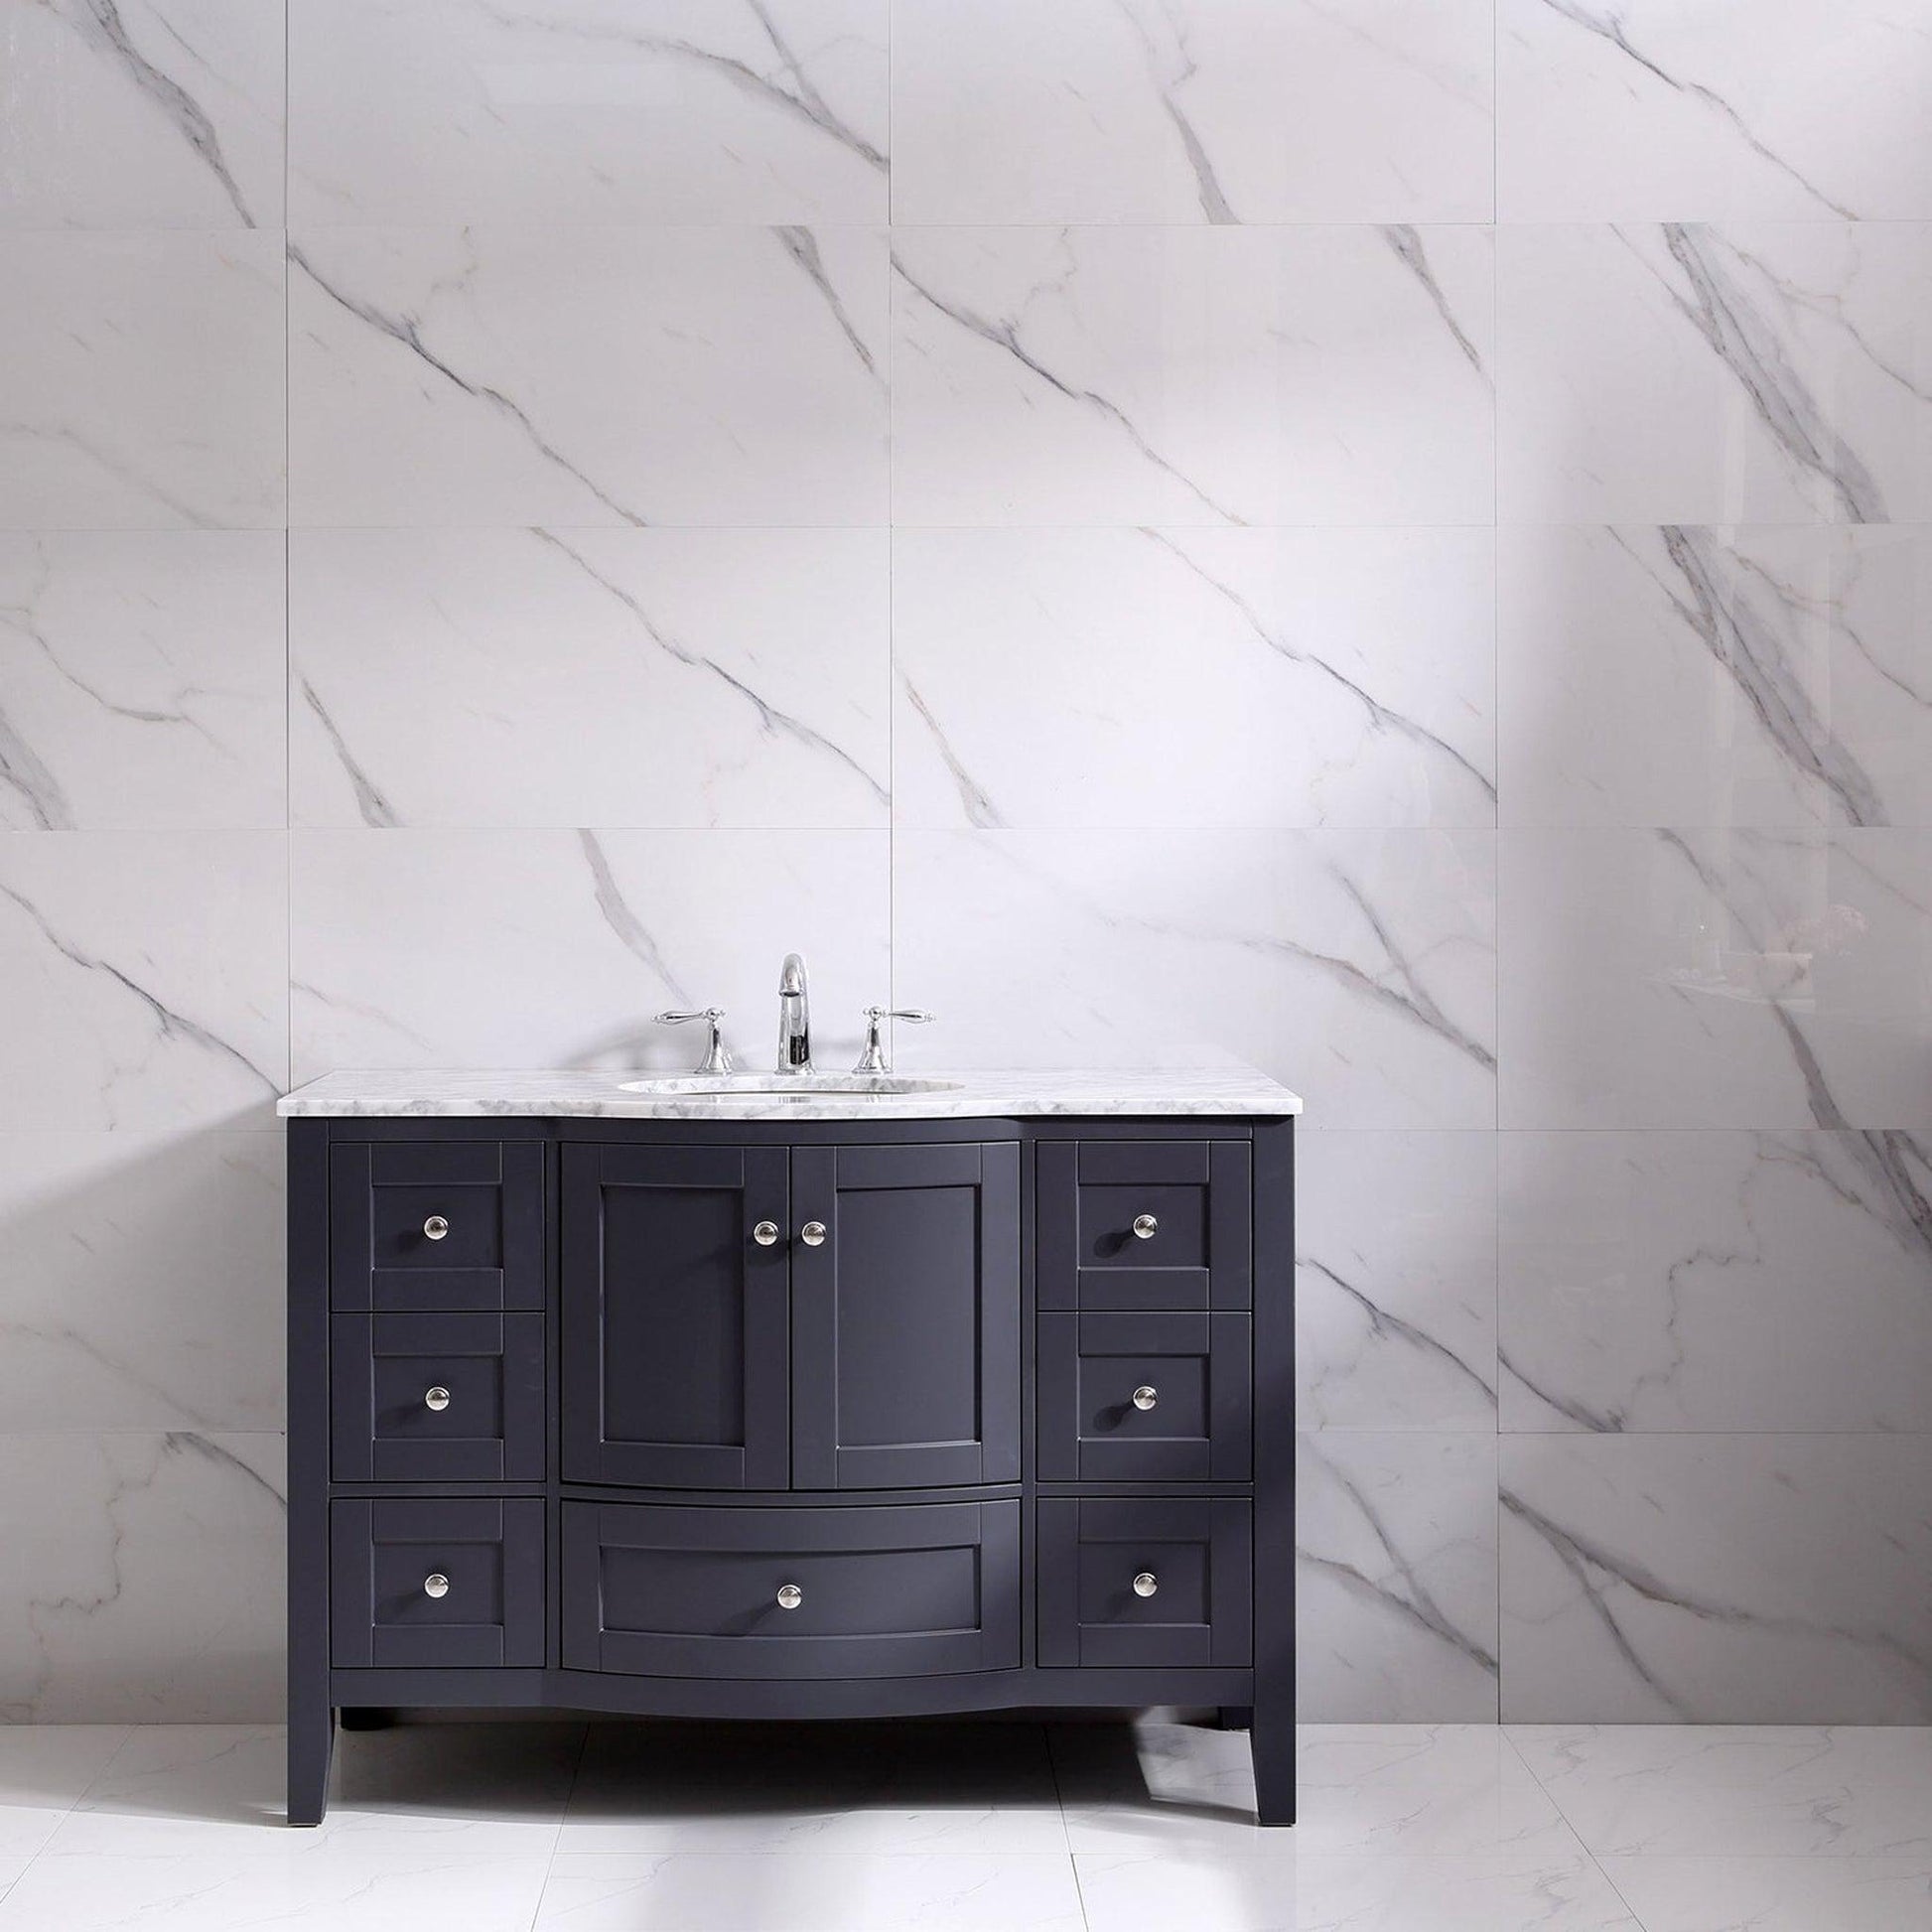 Eviva Stanton 48" x 35" Dark Gray Freestanding Bathroom Vanity With Single Undermount Sink